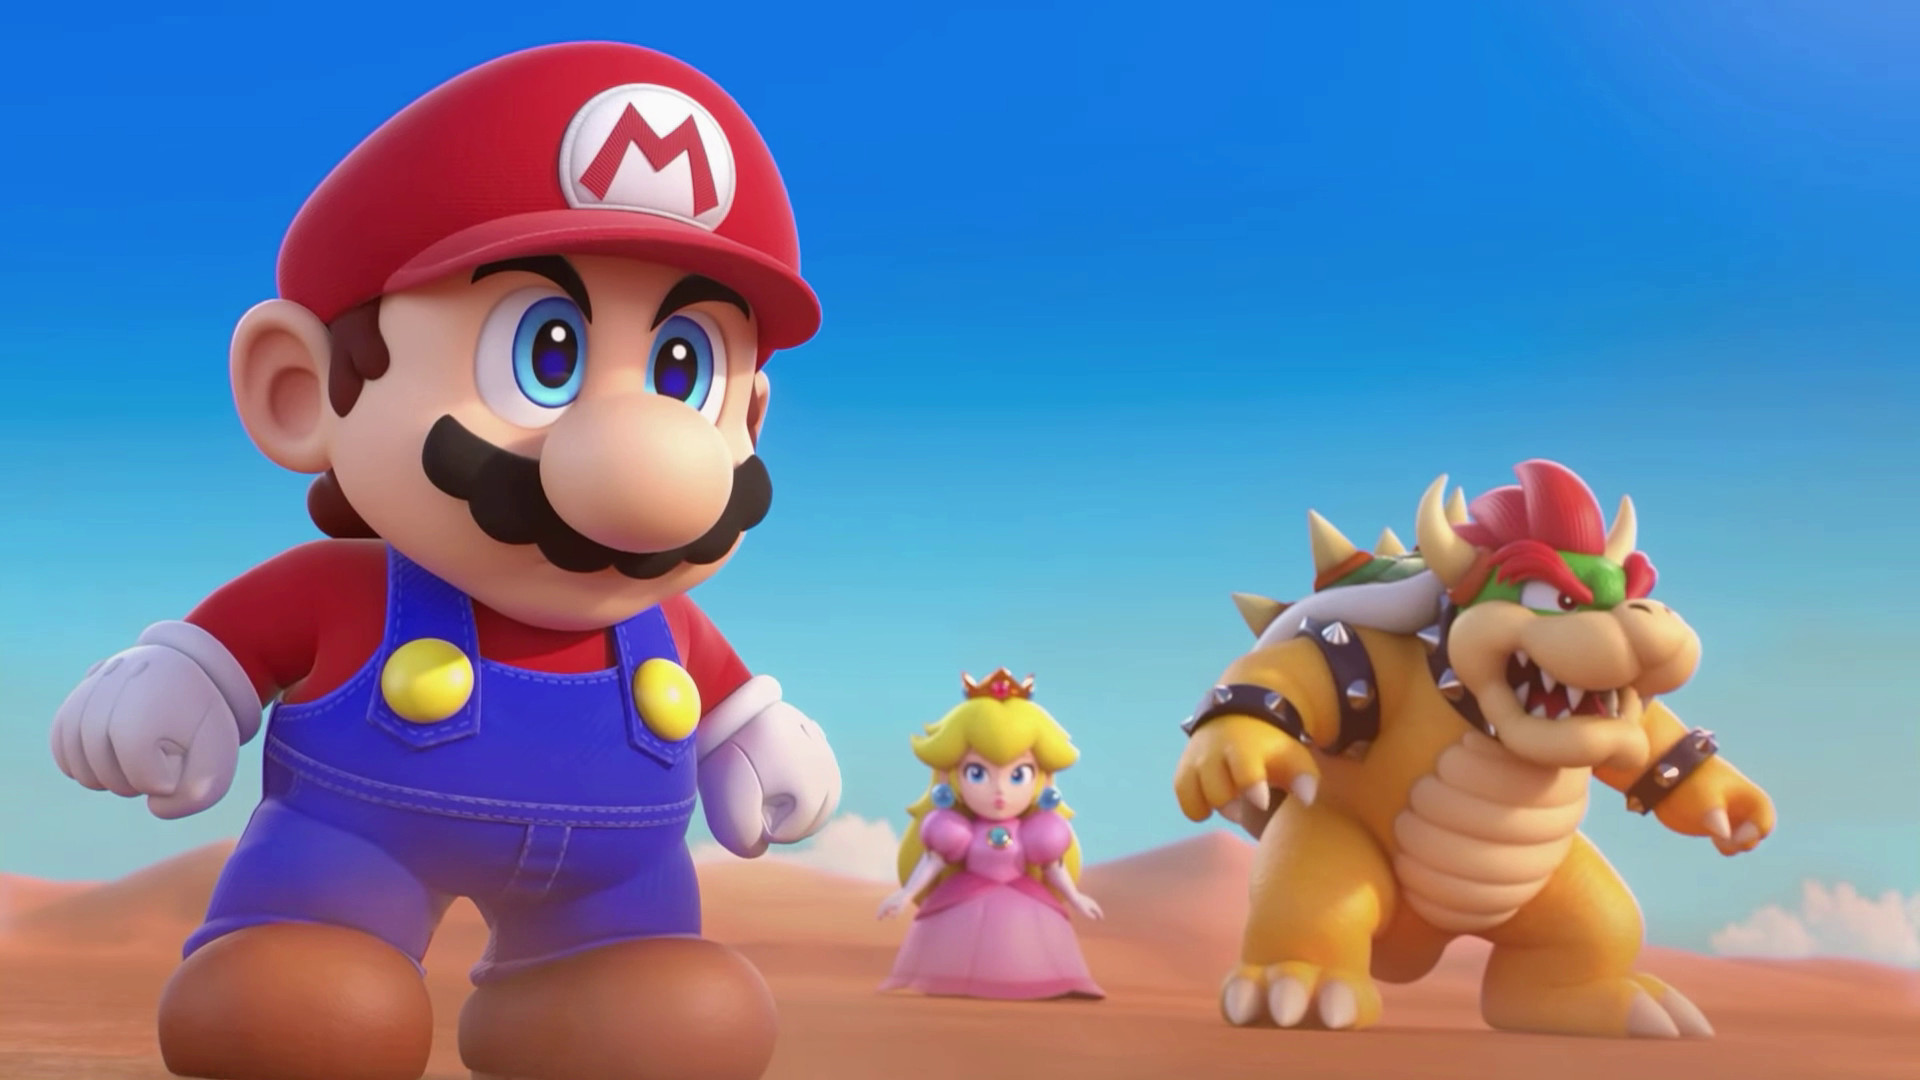 Geek Review: Super Mario RPG (Nintendo Switch)